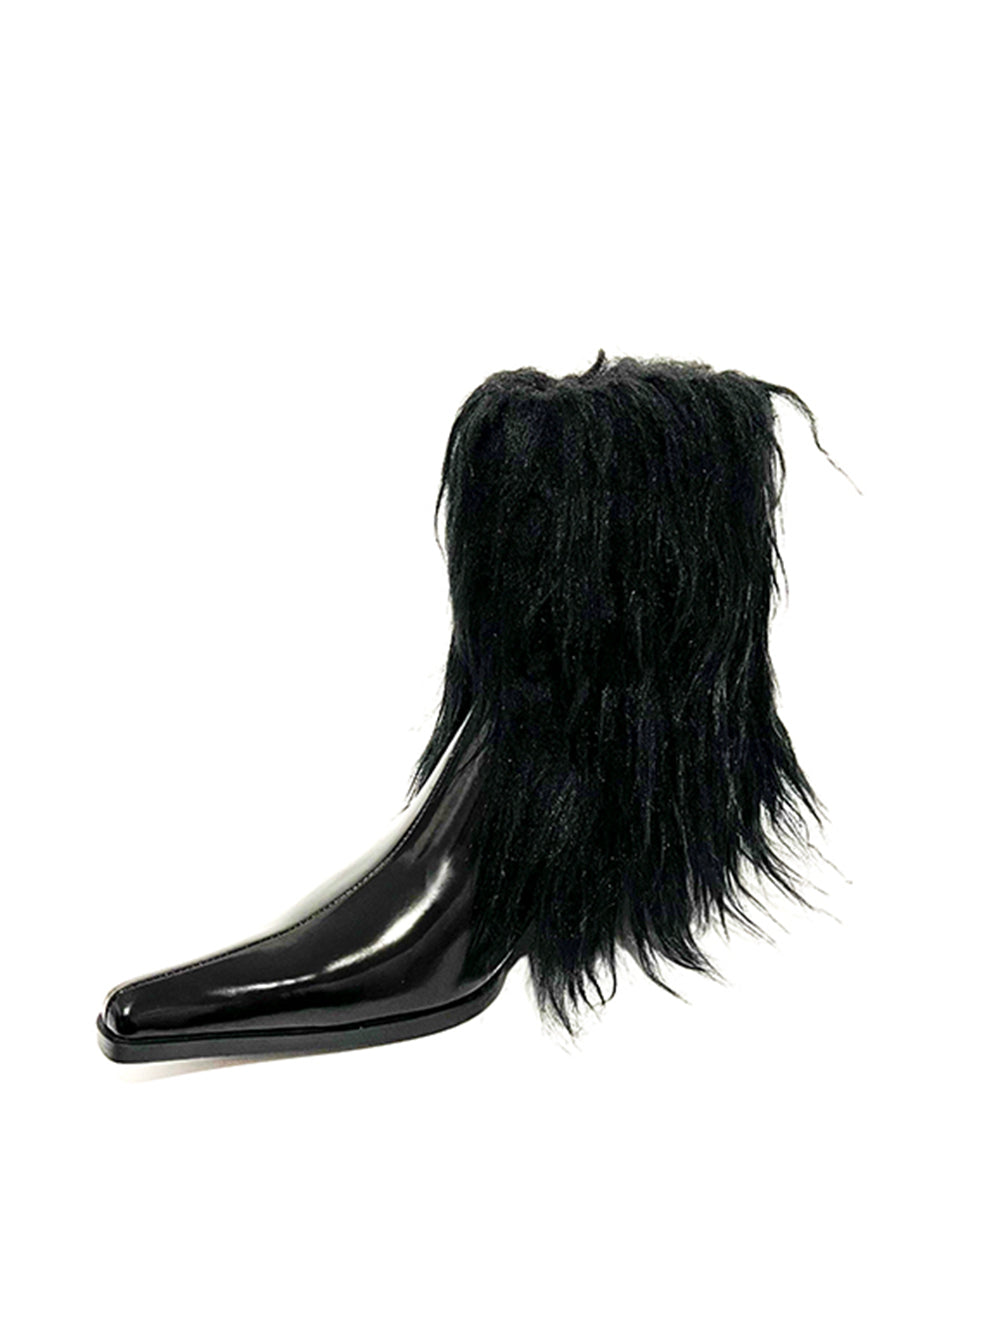 MUKTANK×AZ43 Black Wig Feel Ankle Boots Comfortable Shoes